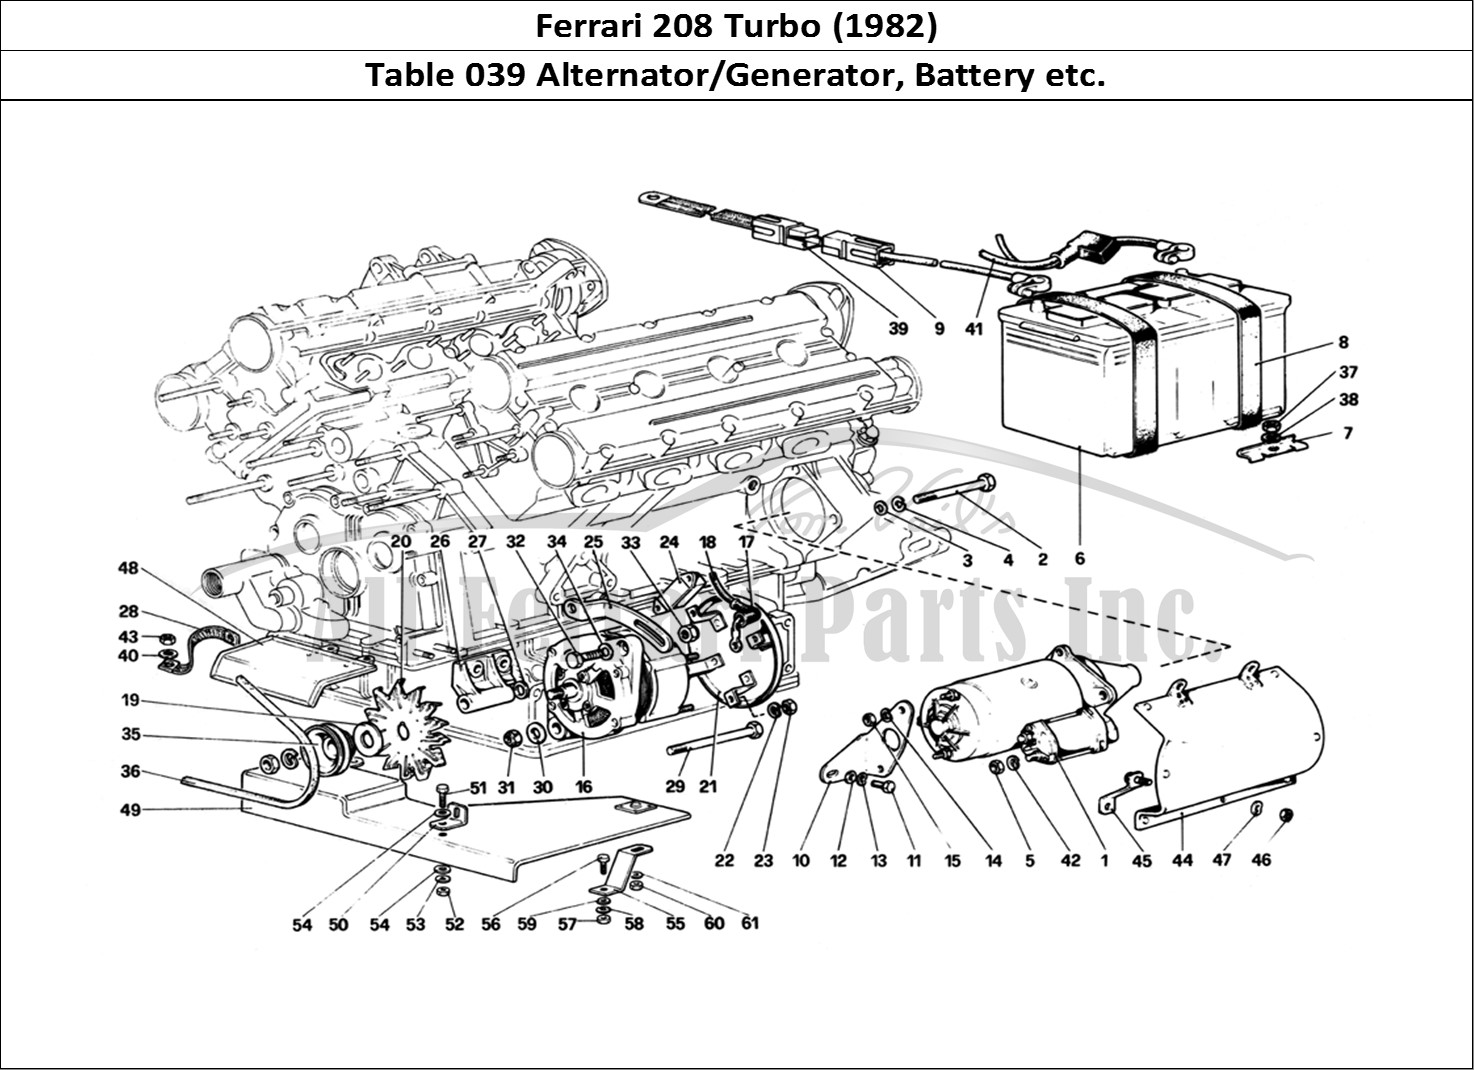 Ferrari Parts Ferrari 208 Turbo (1982) Page 039 Electric Generating Syste